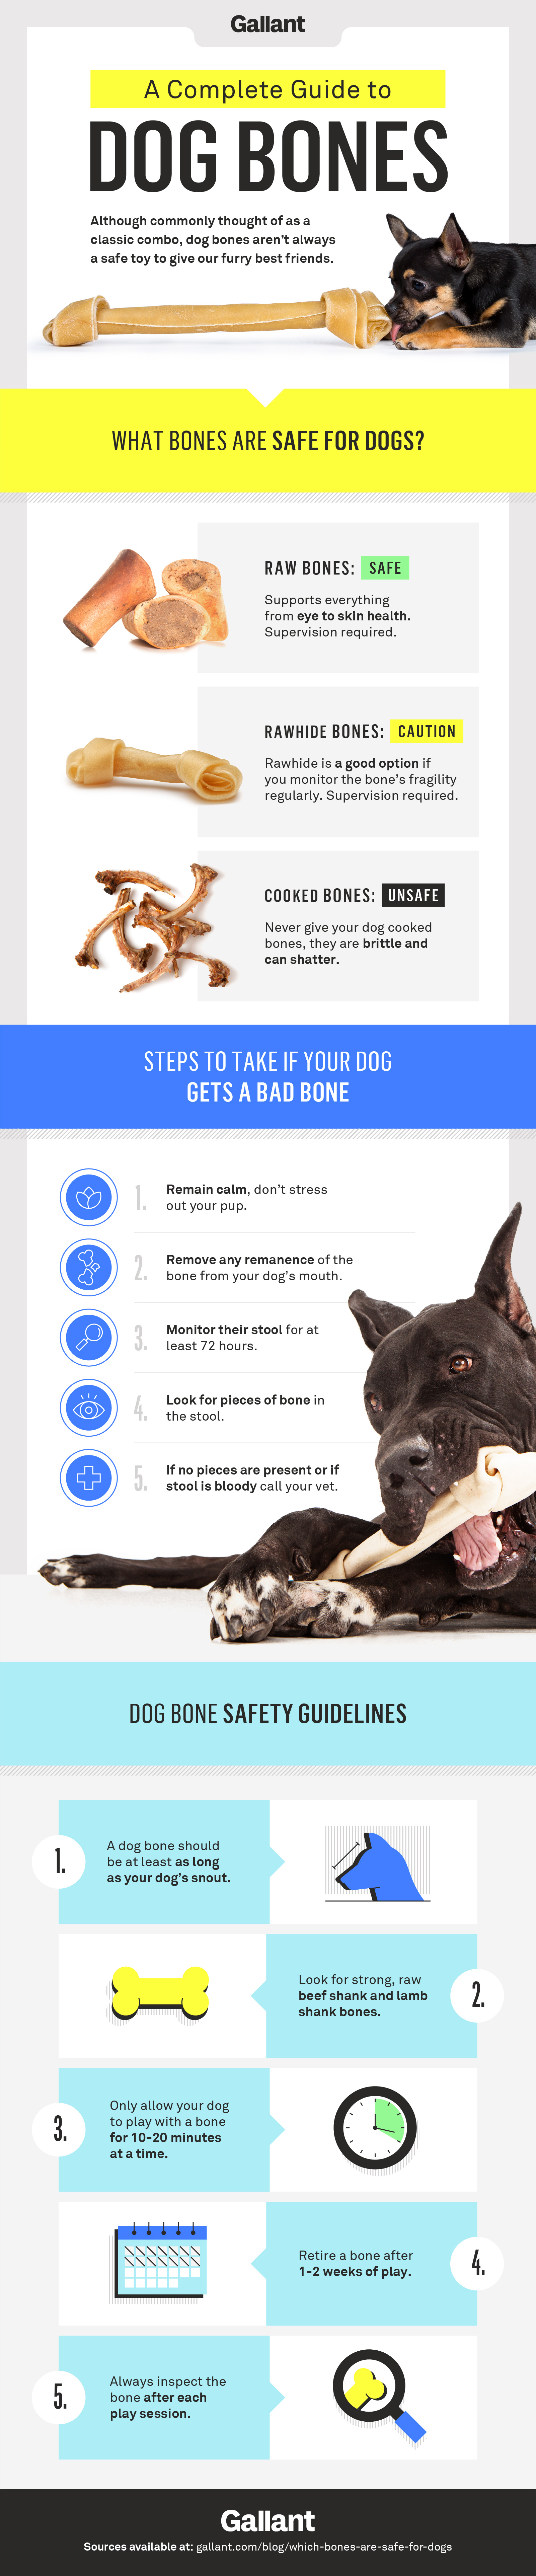 safe dog bones for puppies